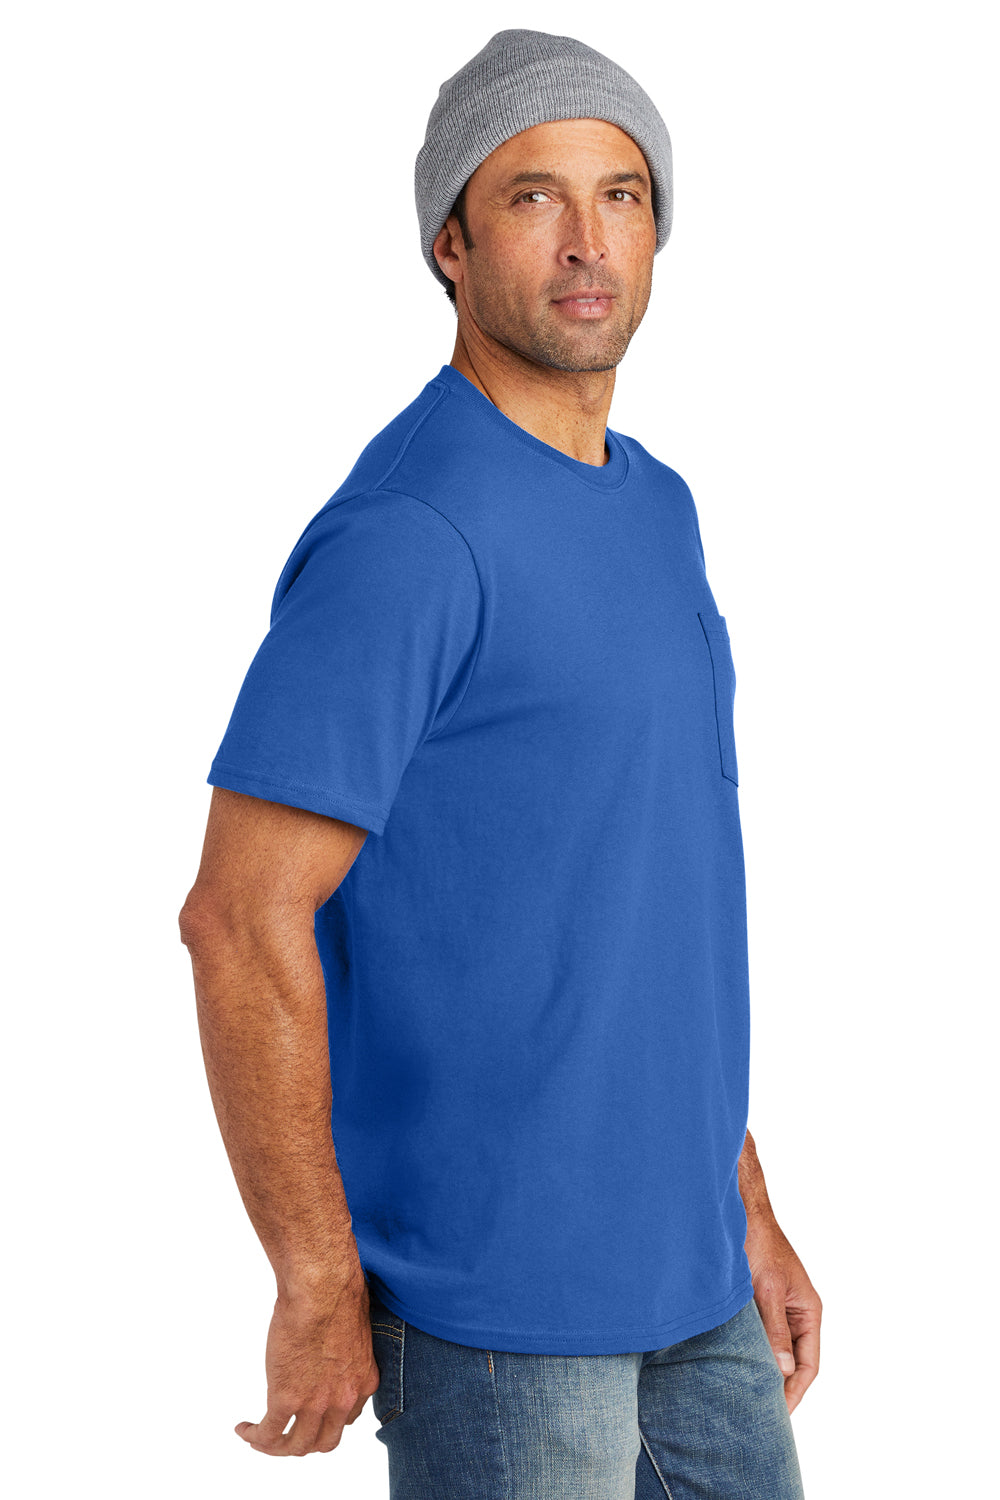 Volunteer Knitwear VL100P USA Made All American Short Sleeve Crewneck T-Shirt w/ Pocket True Royal Blue Side